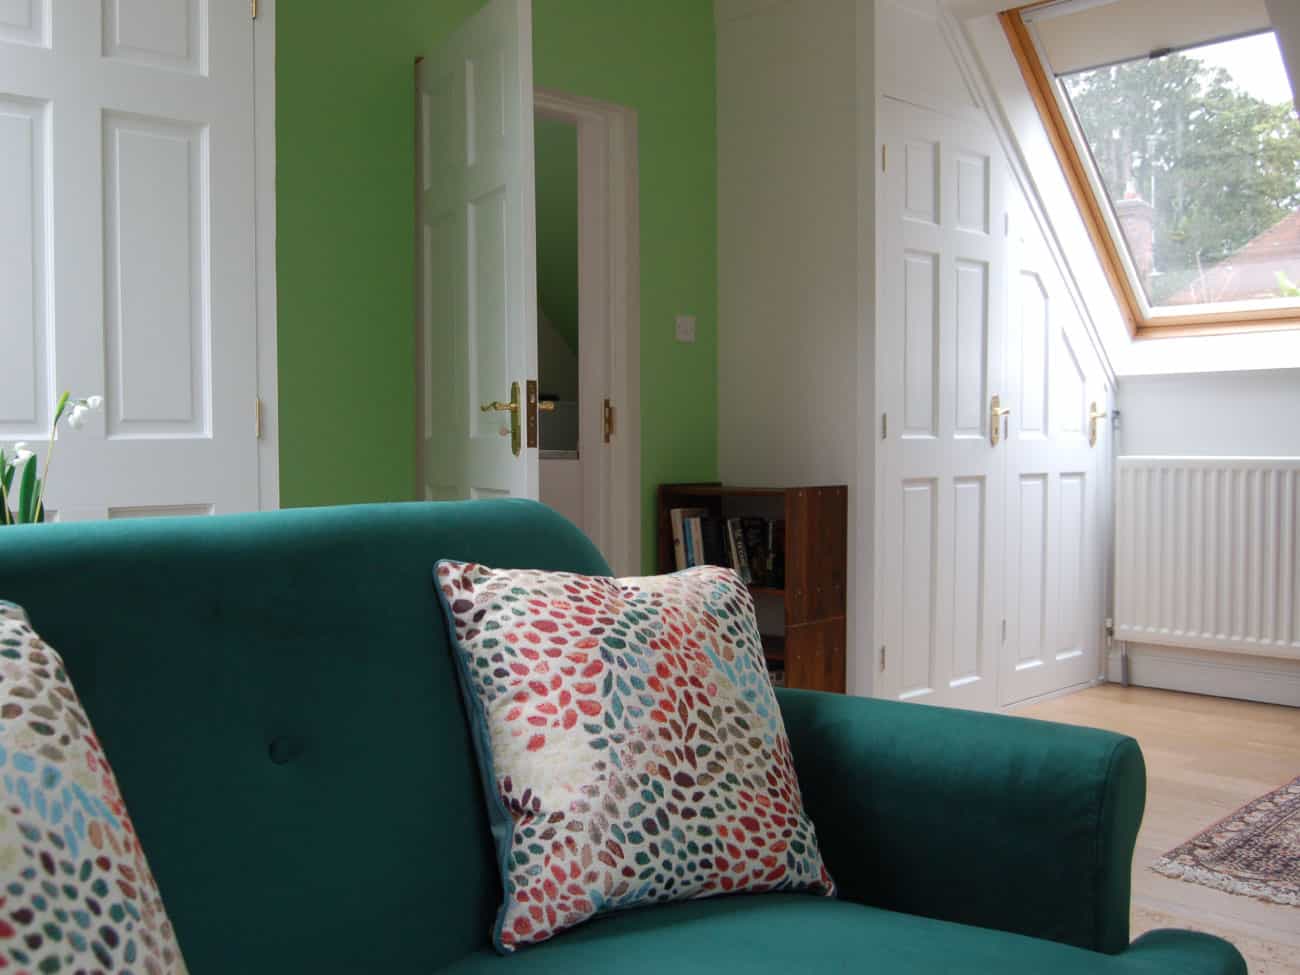 holiday home design in warwickshire green velvet sofa seasonal soul home